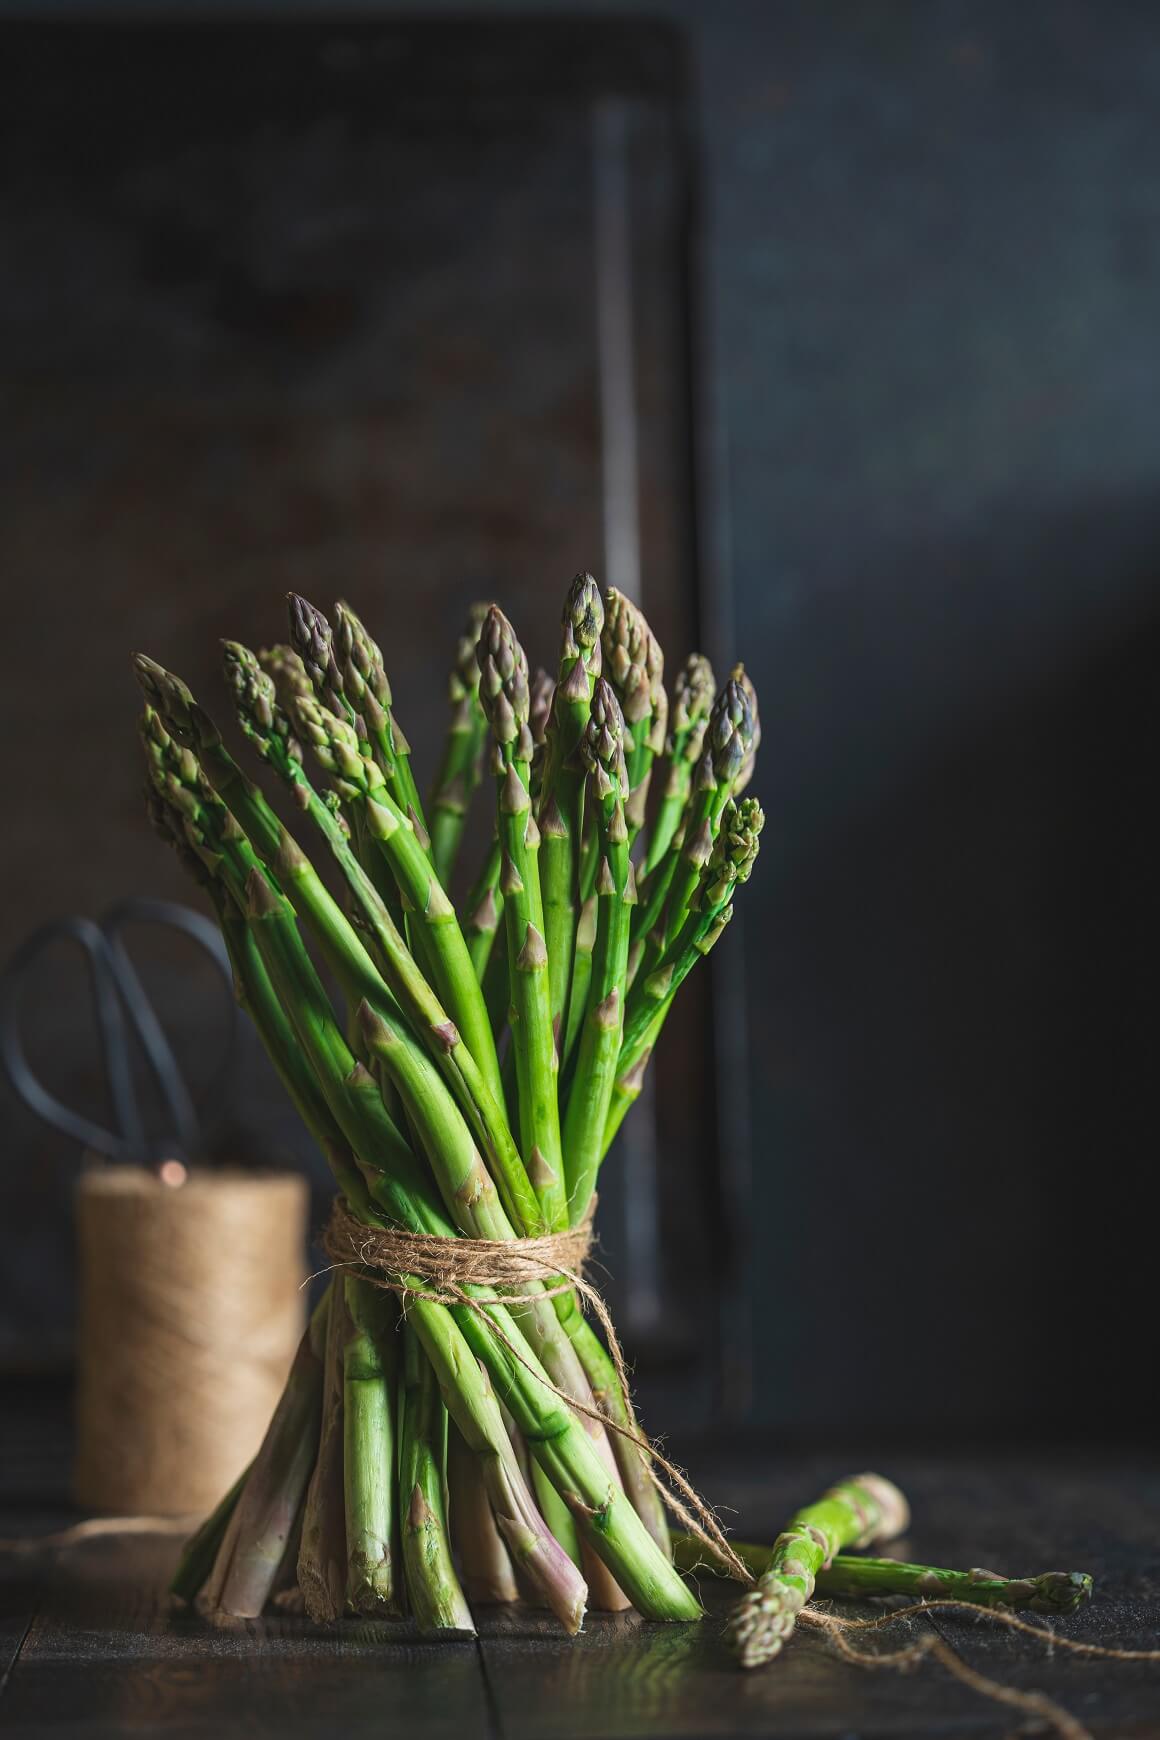 Šparoge sadrže visoke razine aminokiseline asparagin